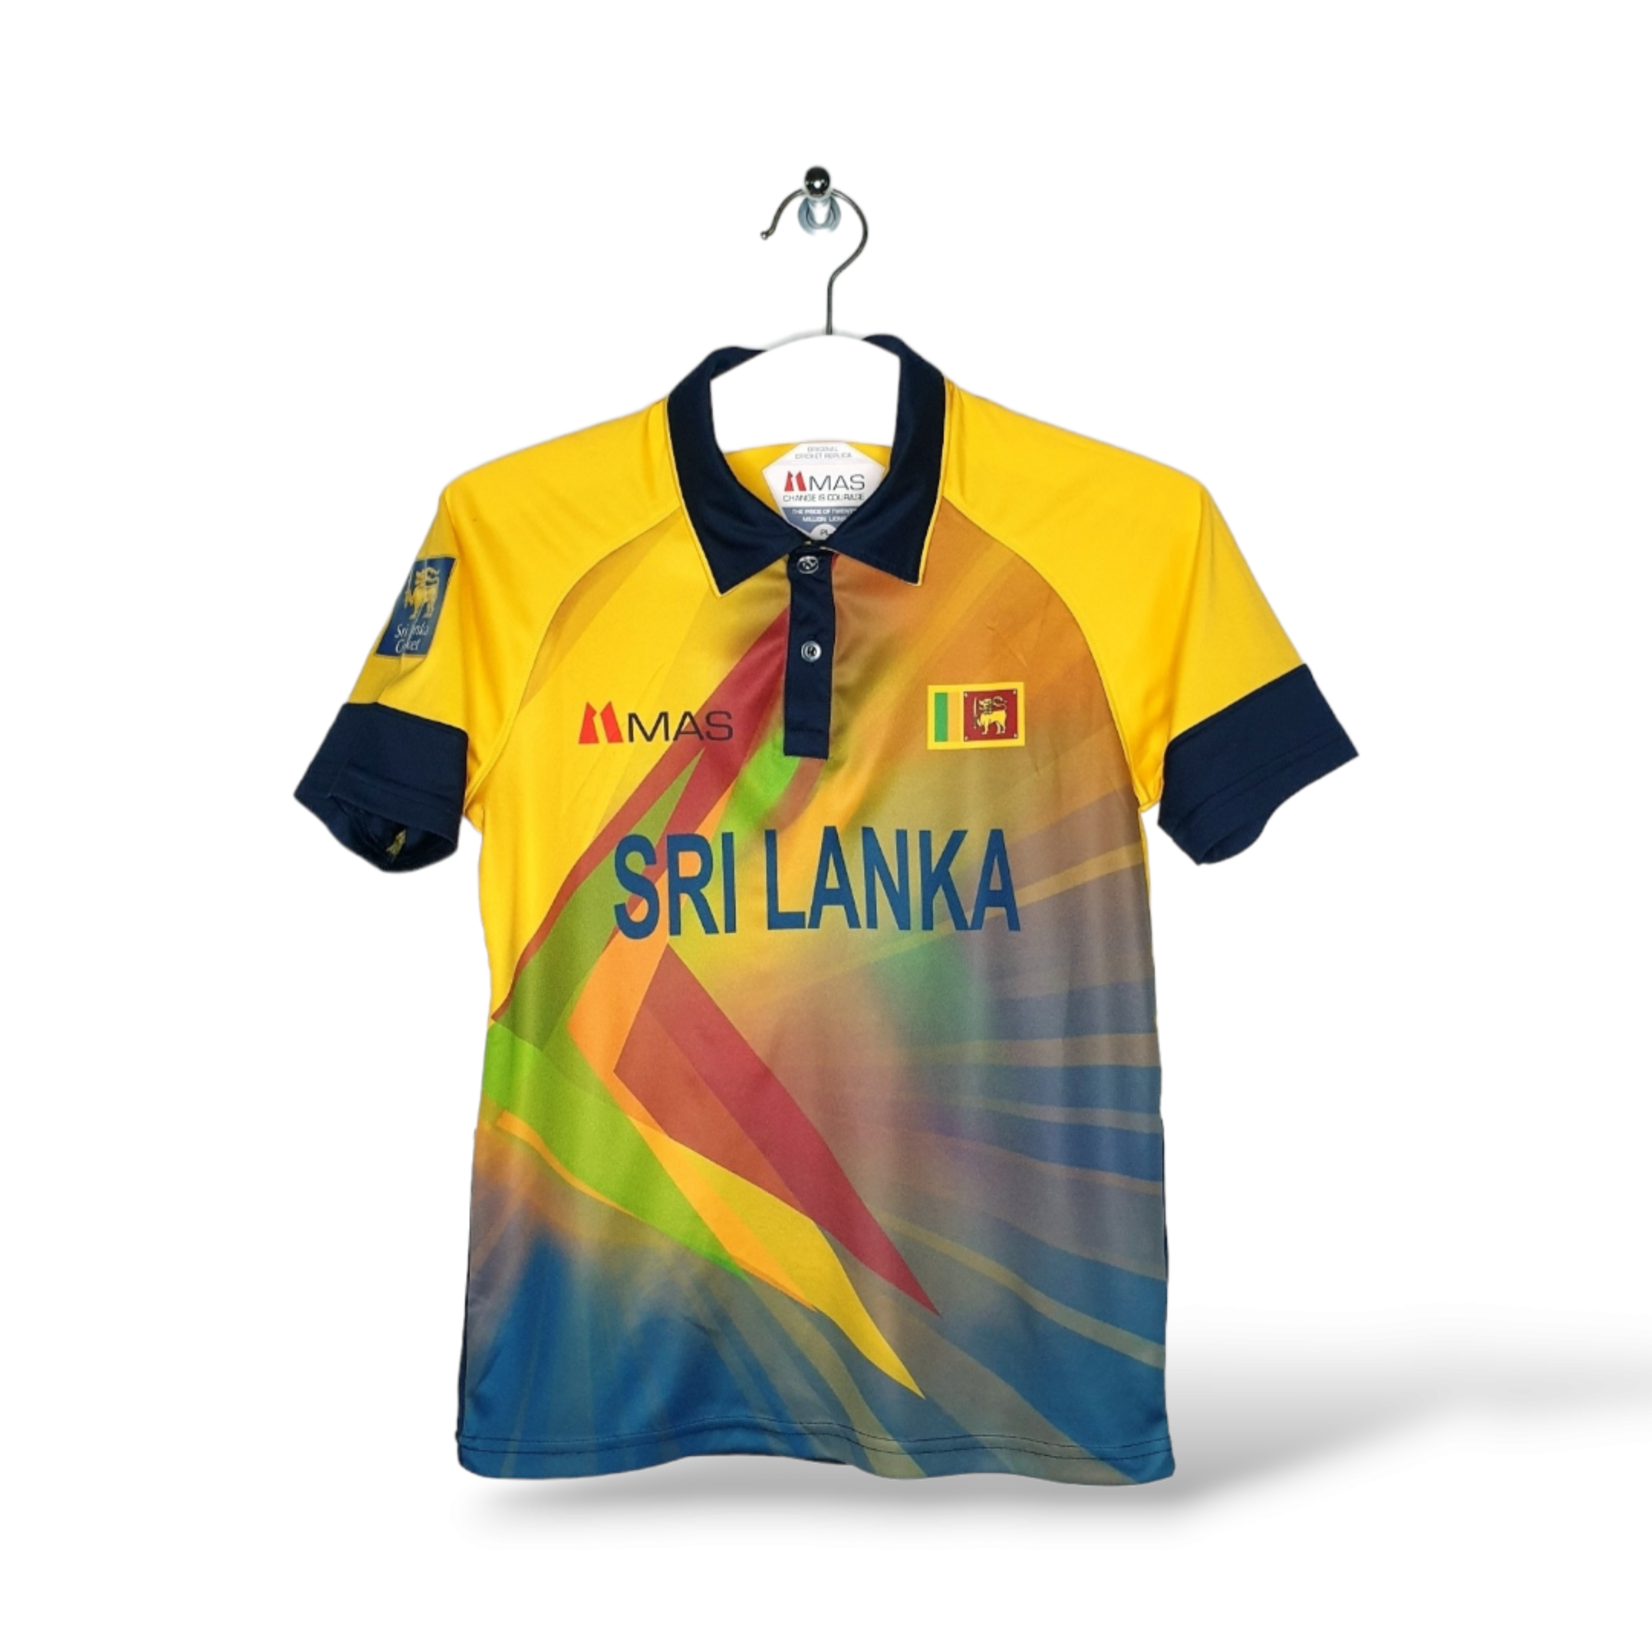 Sri Lanka ODI Official Cricket Jersey (Original MAS)